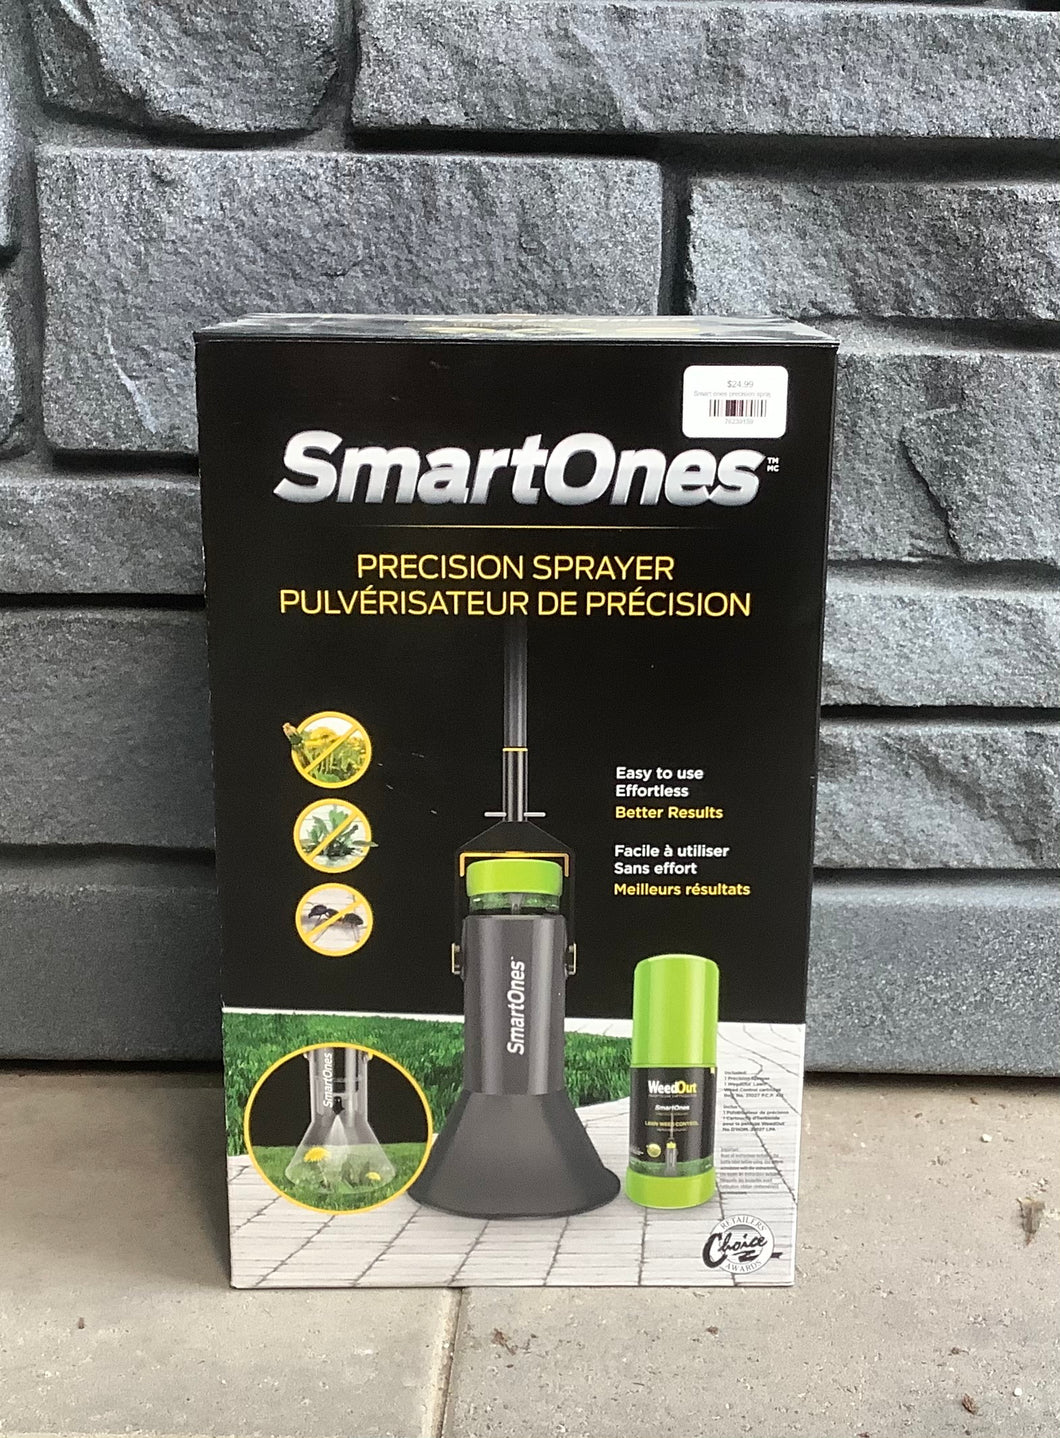 Smart ones precision sprayer kit